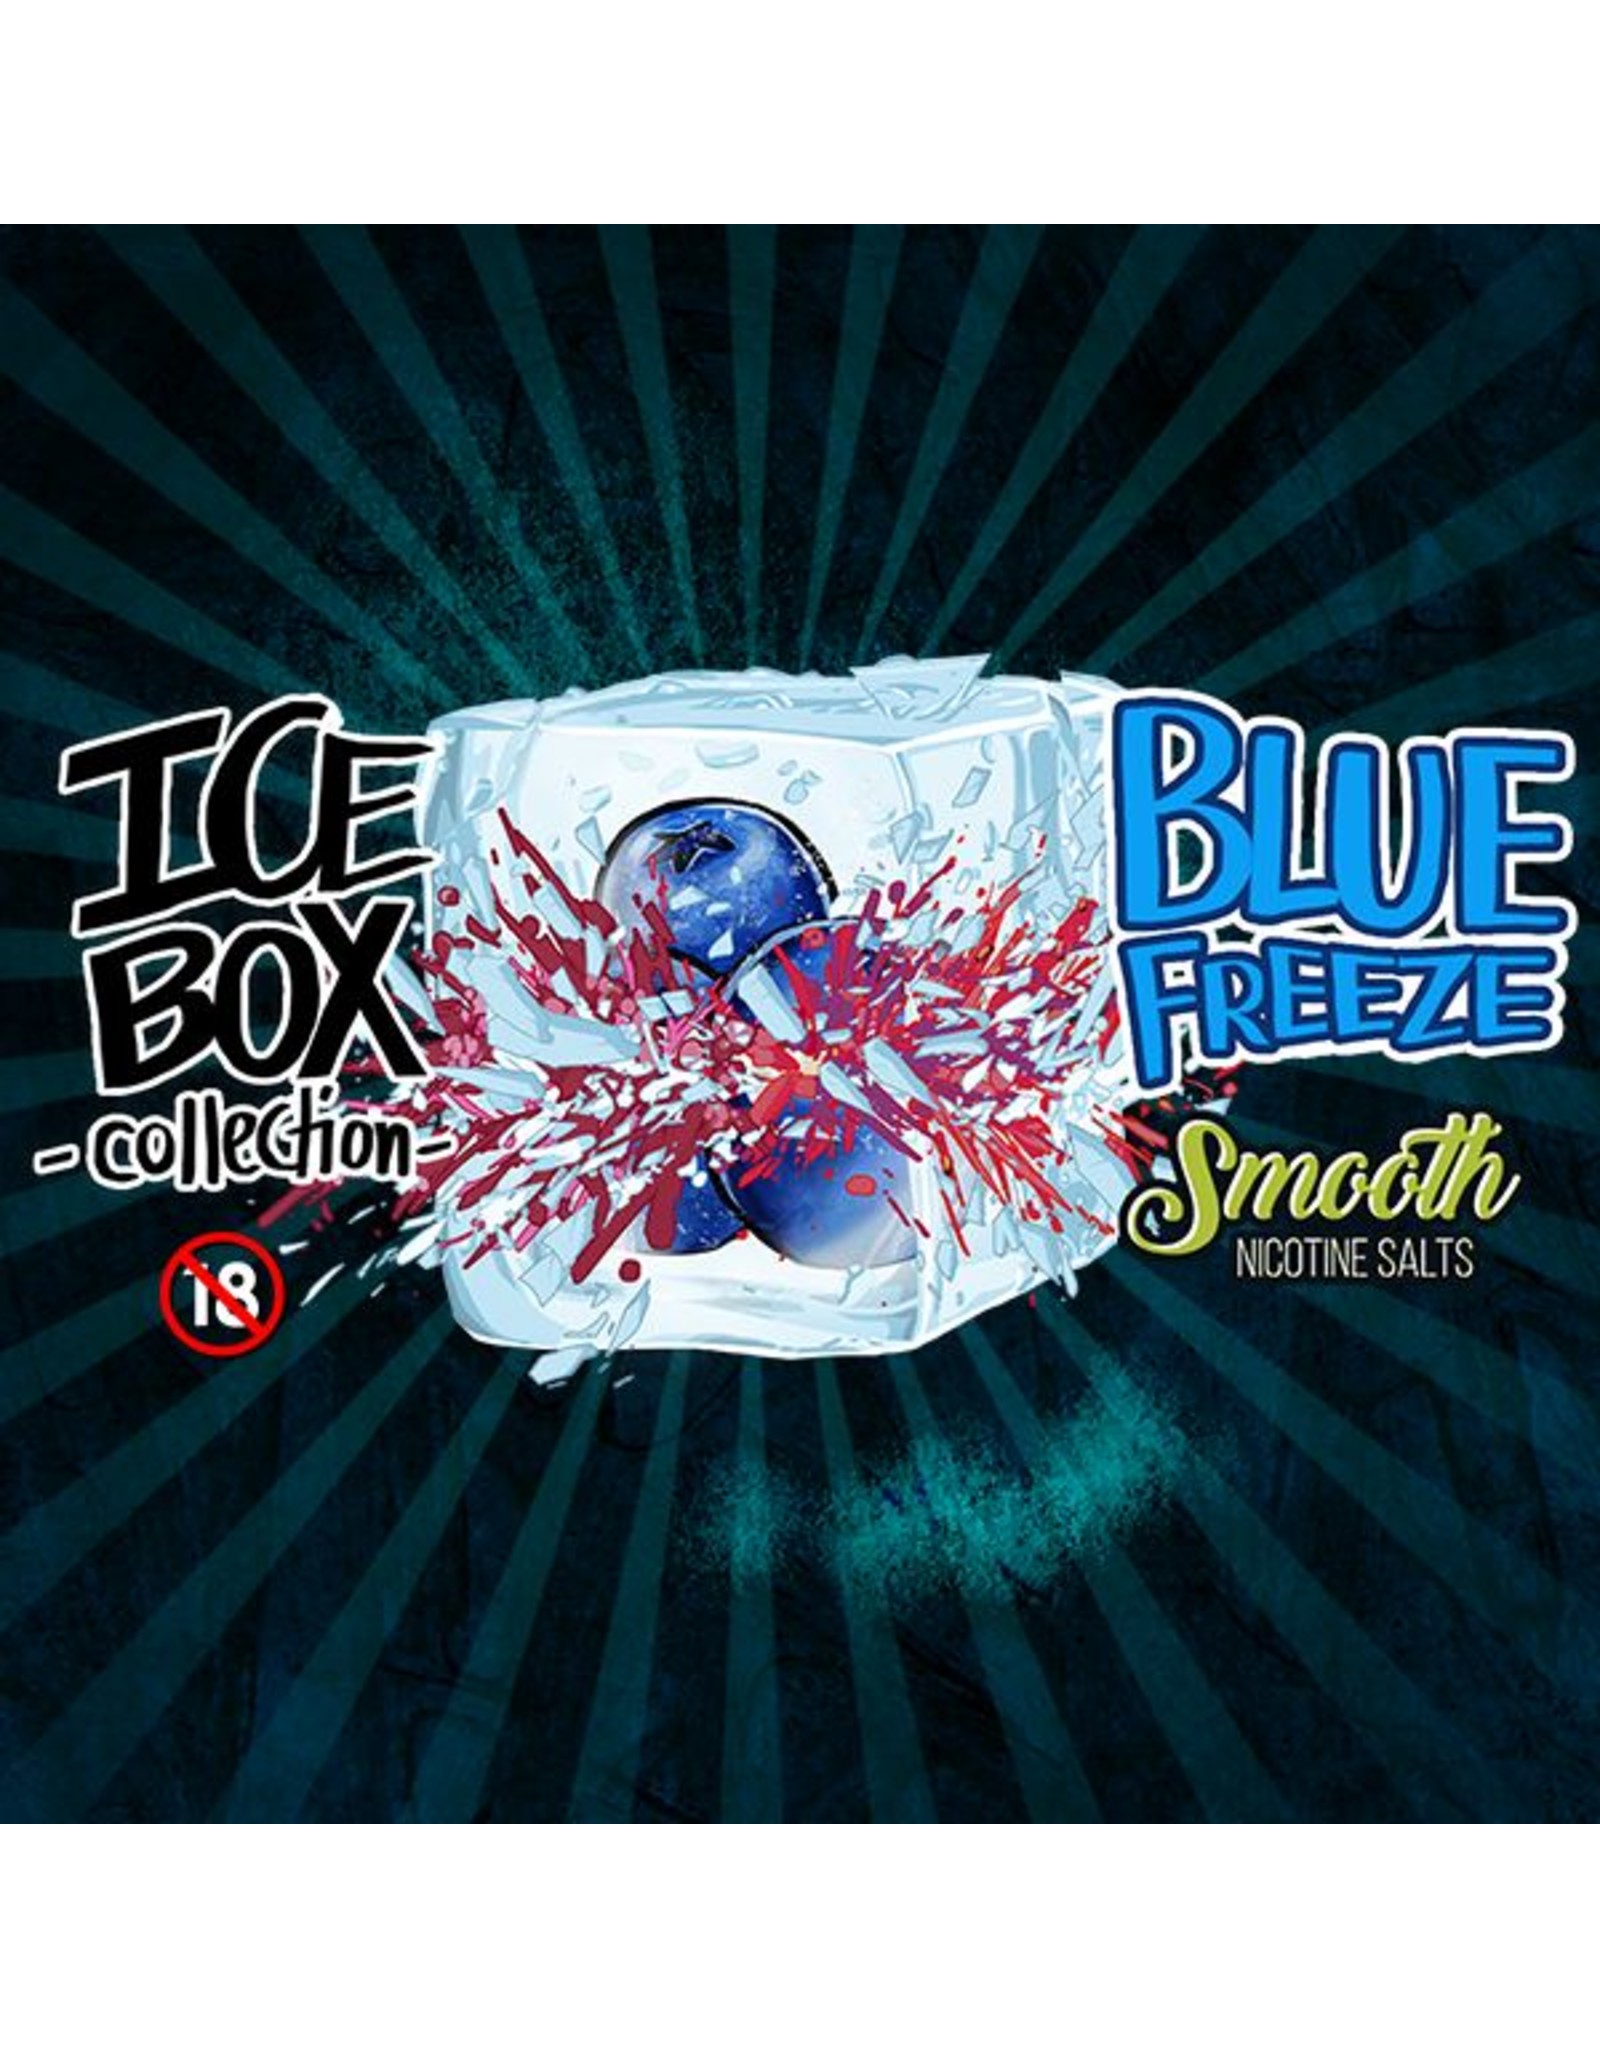 Smooth Nic Salts Smooth Nic Salts - Blue Freeze (30ml)